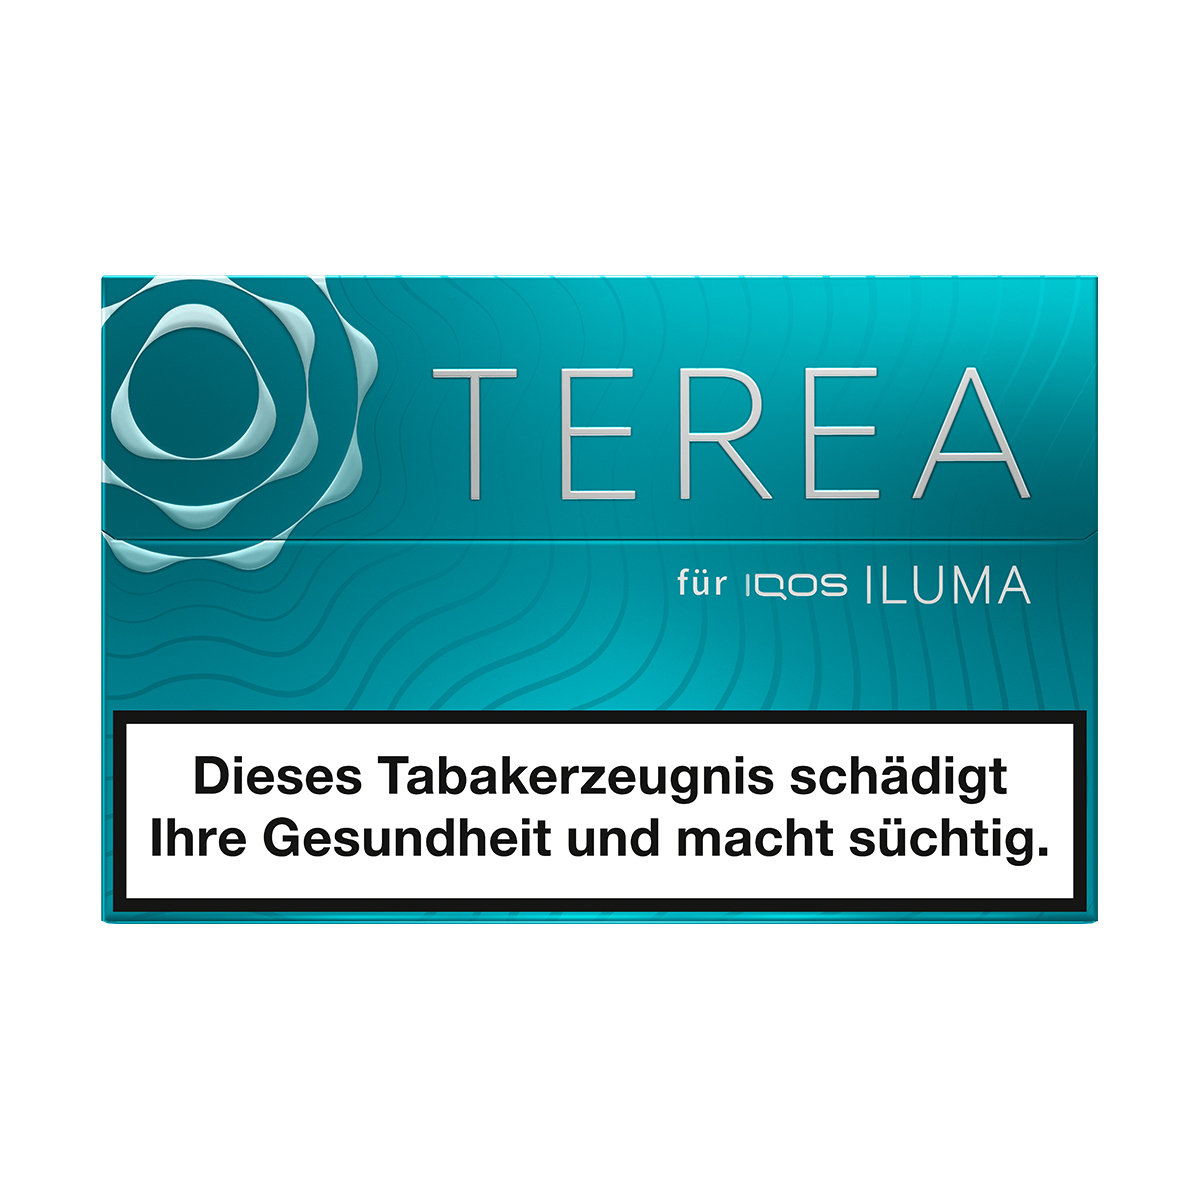 IQOS TEREA Turquoise Selection 20er Pack Tabaksticks jetzt kaufen